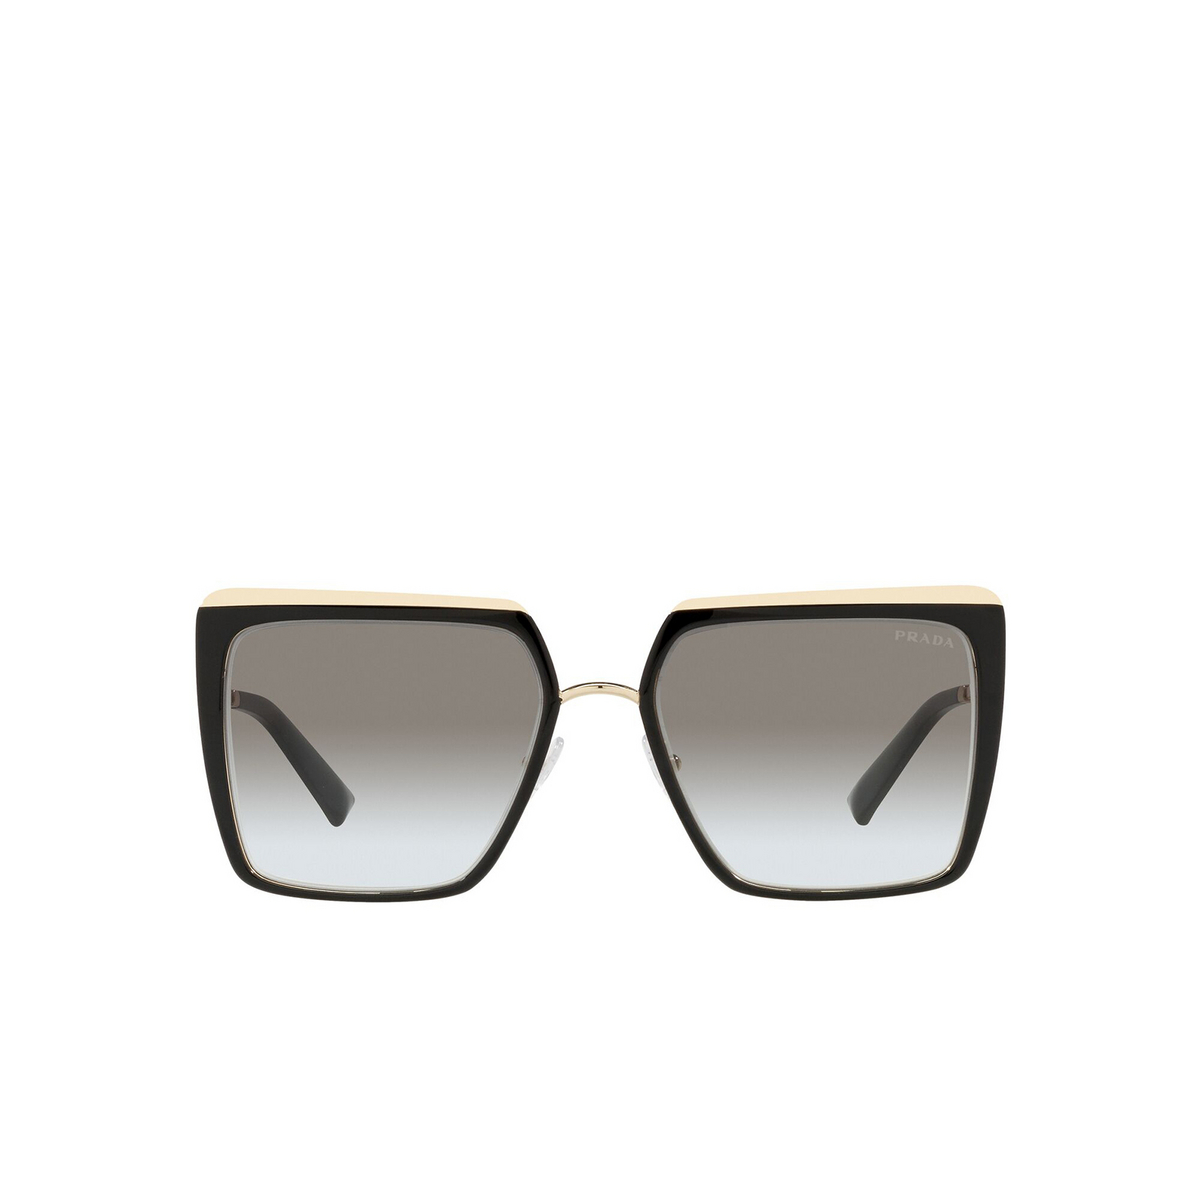 Prada PR 58WS Sunglasses AAV0A7 Black / Pale Gold - front view